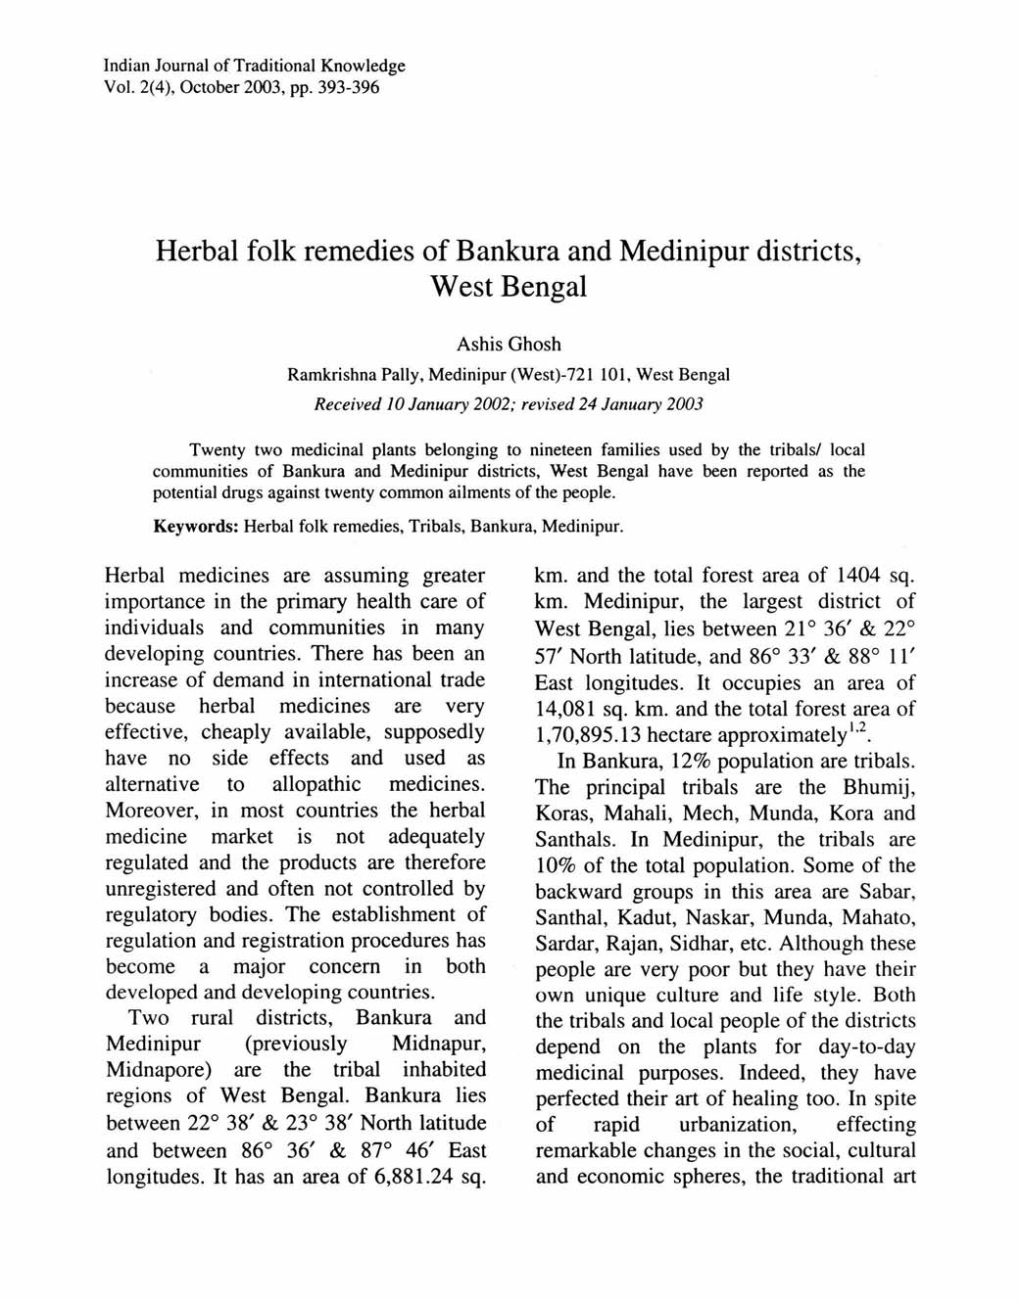 Herbal Folk Remedies of Bankura and Medinipur Districts, West Bengal